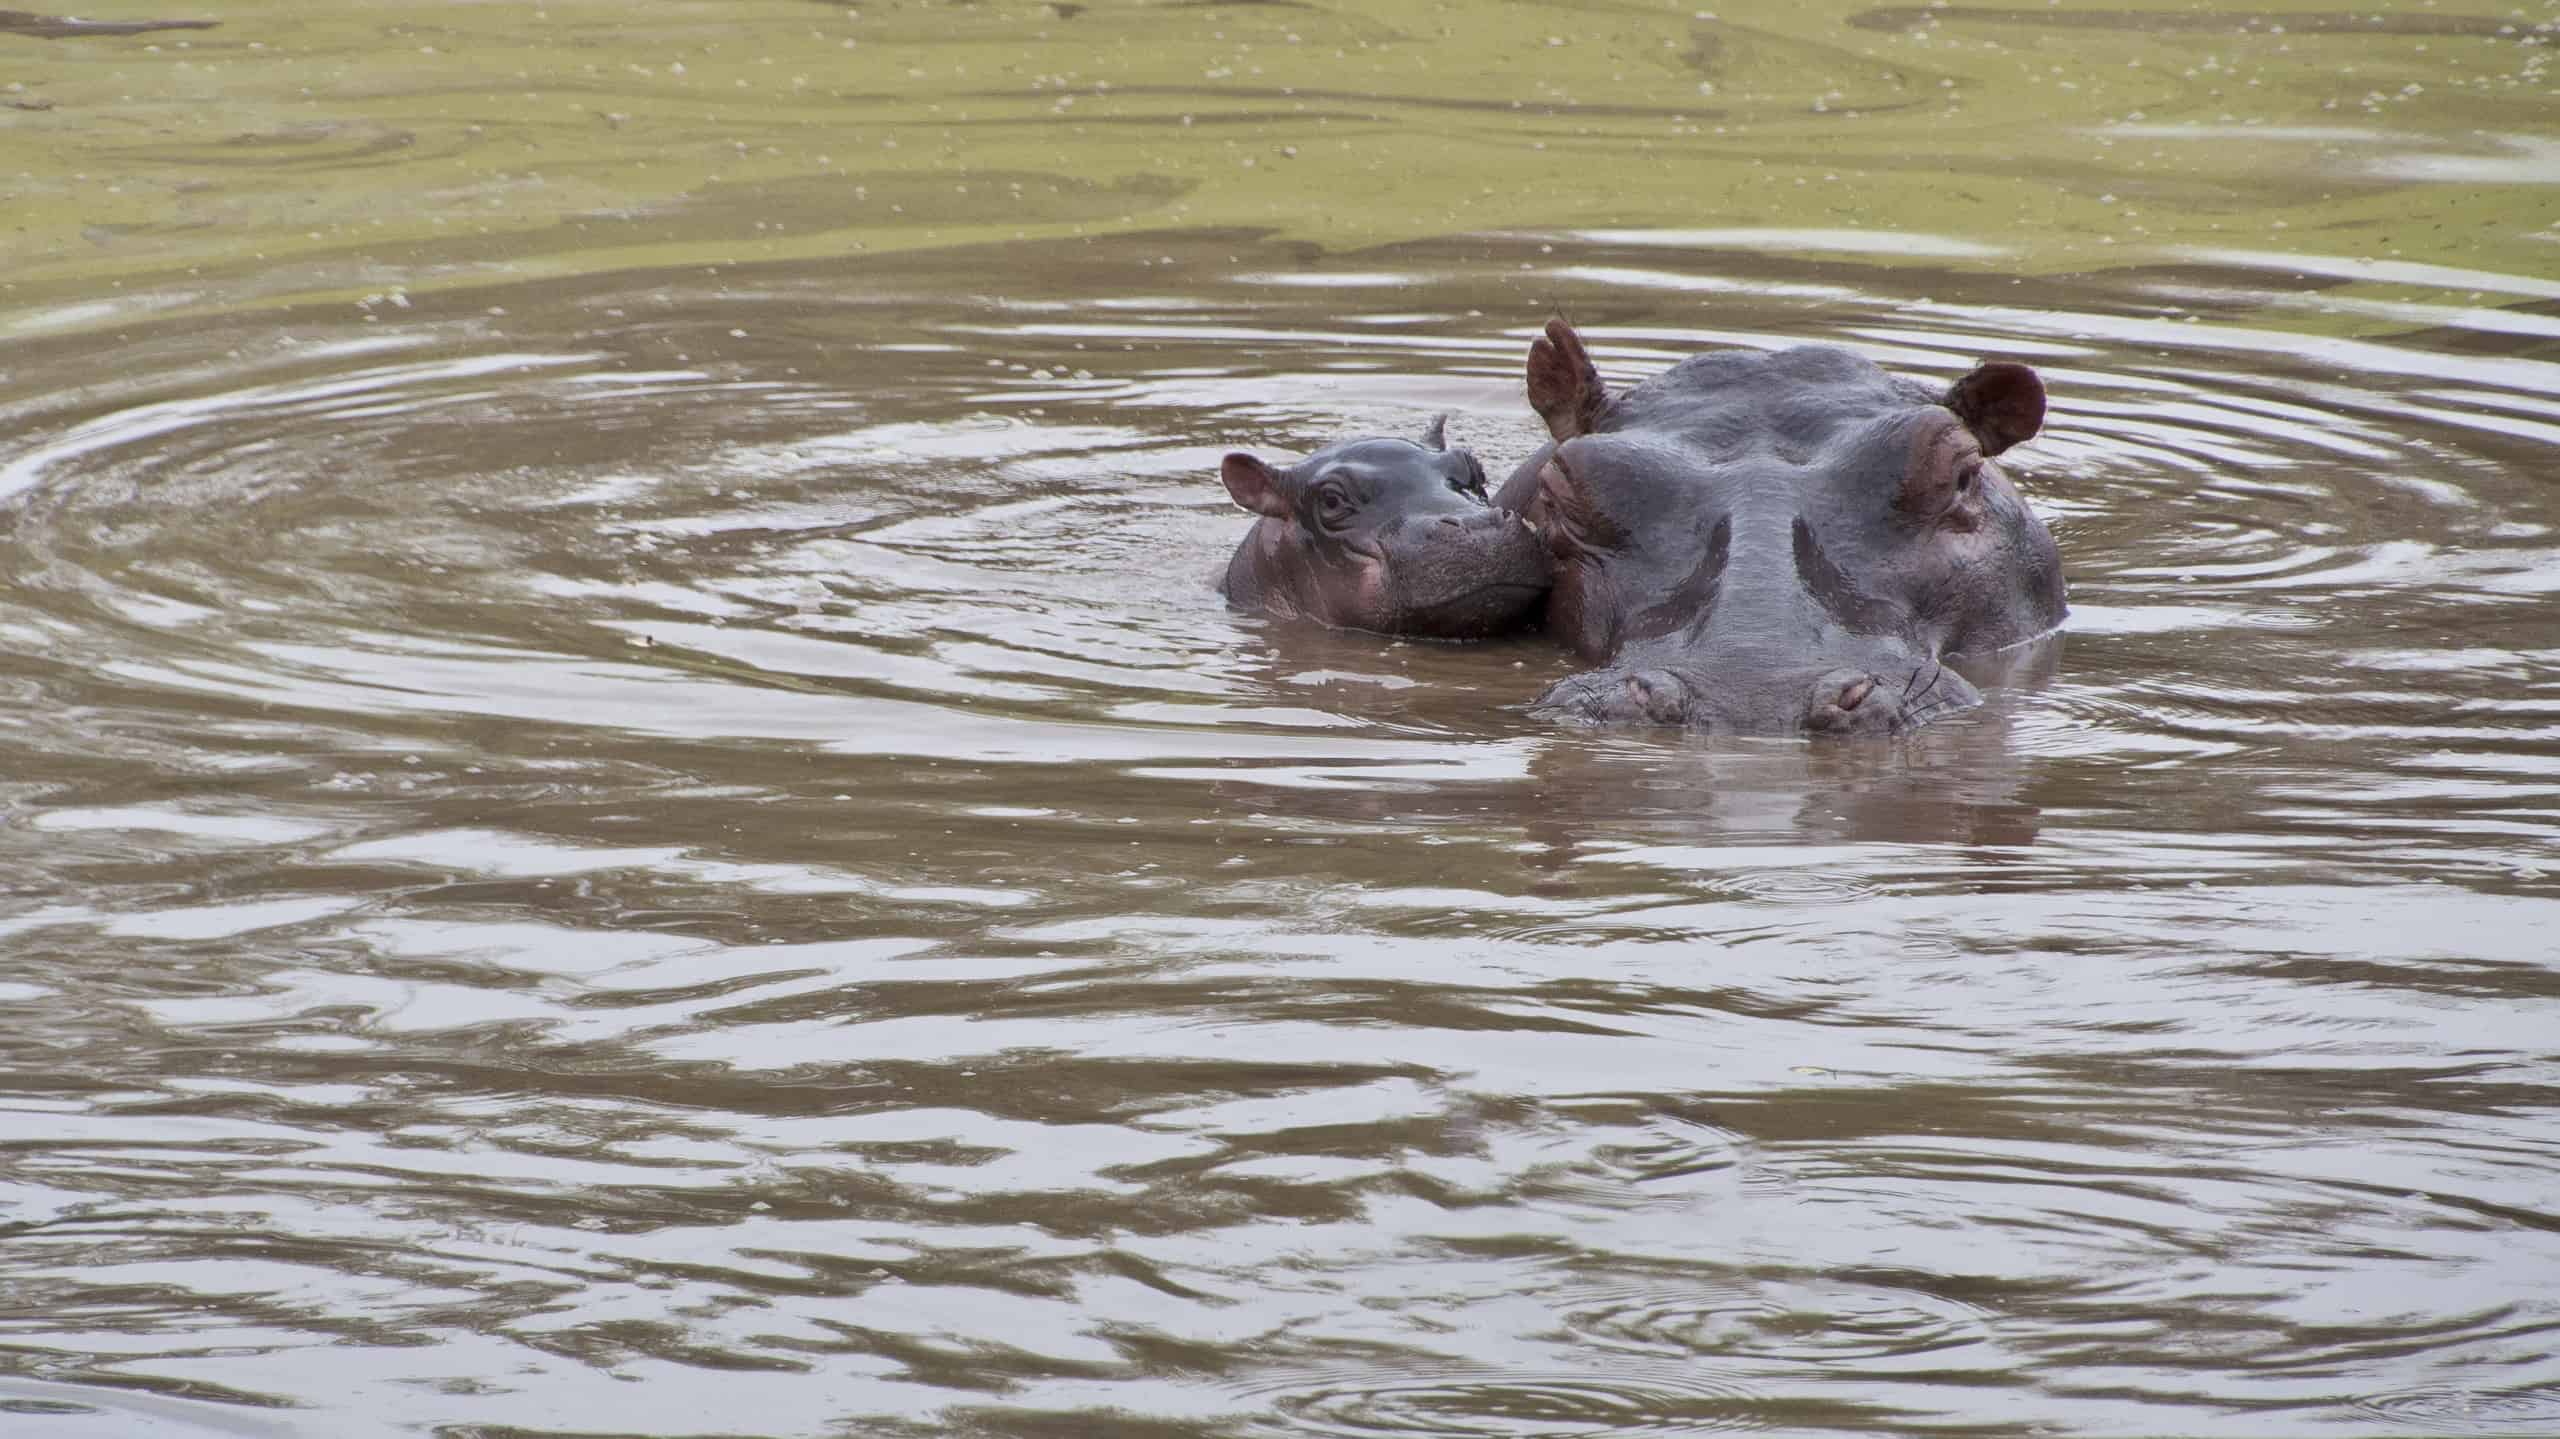 Wild Newborn Baby Hippopotamas calf and Mother In Africa